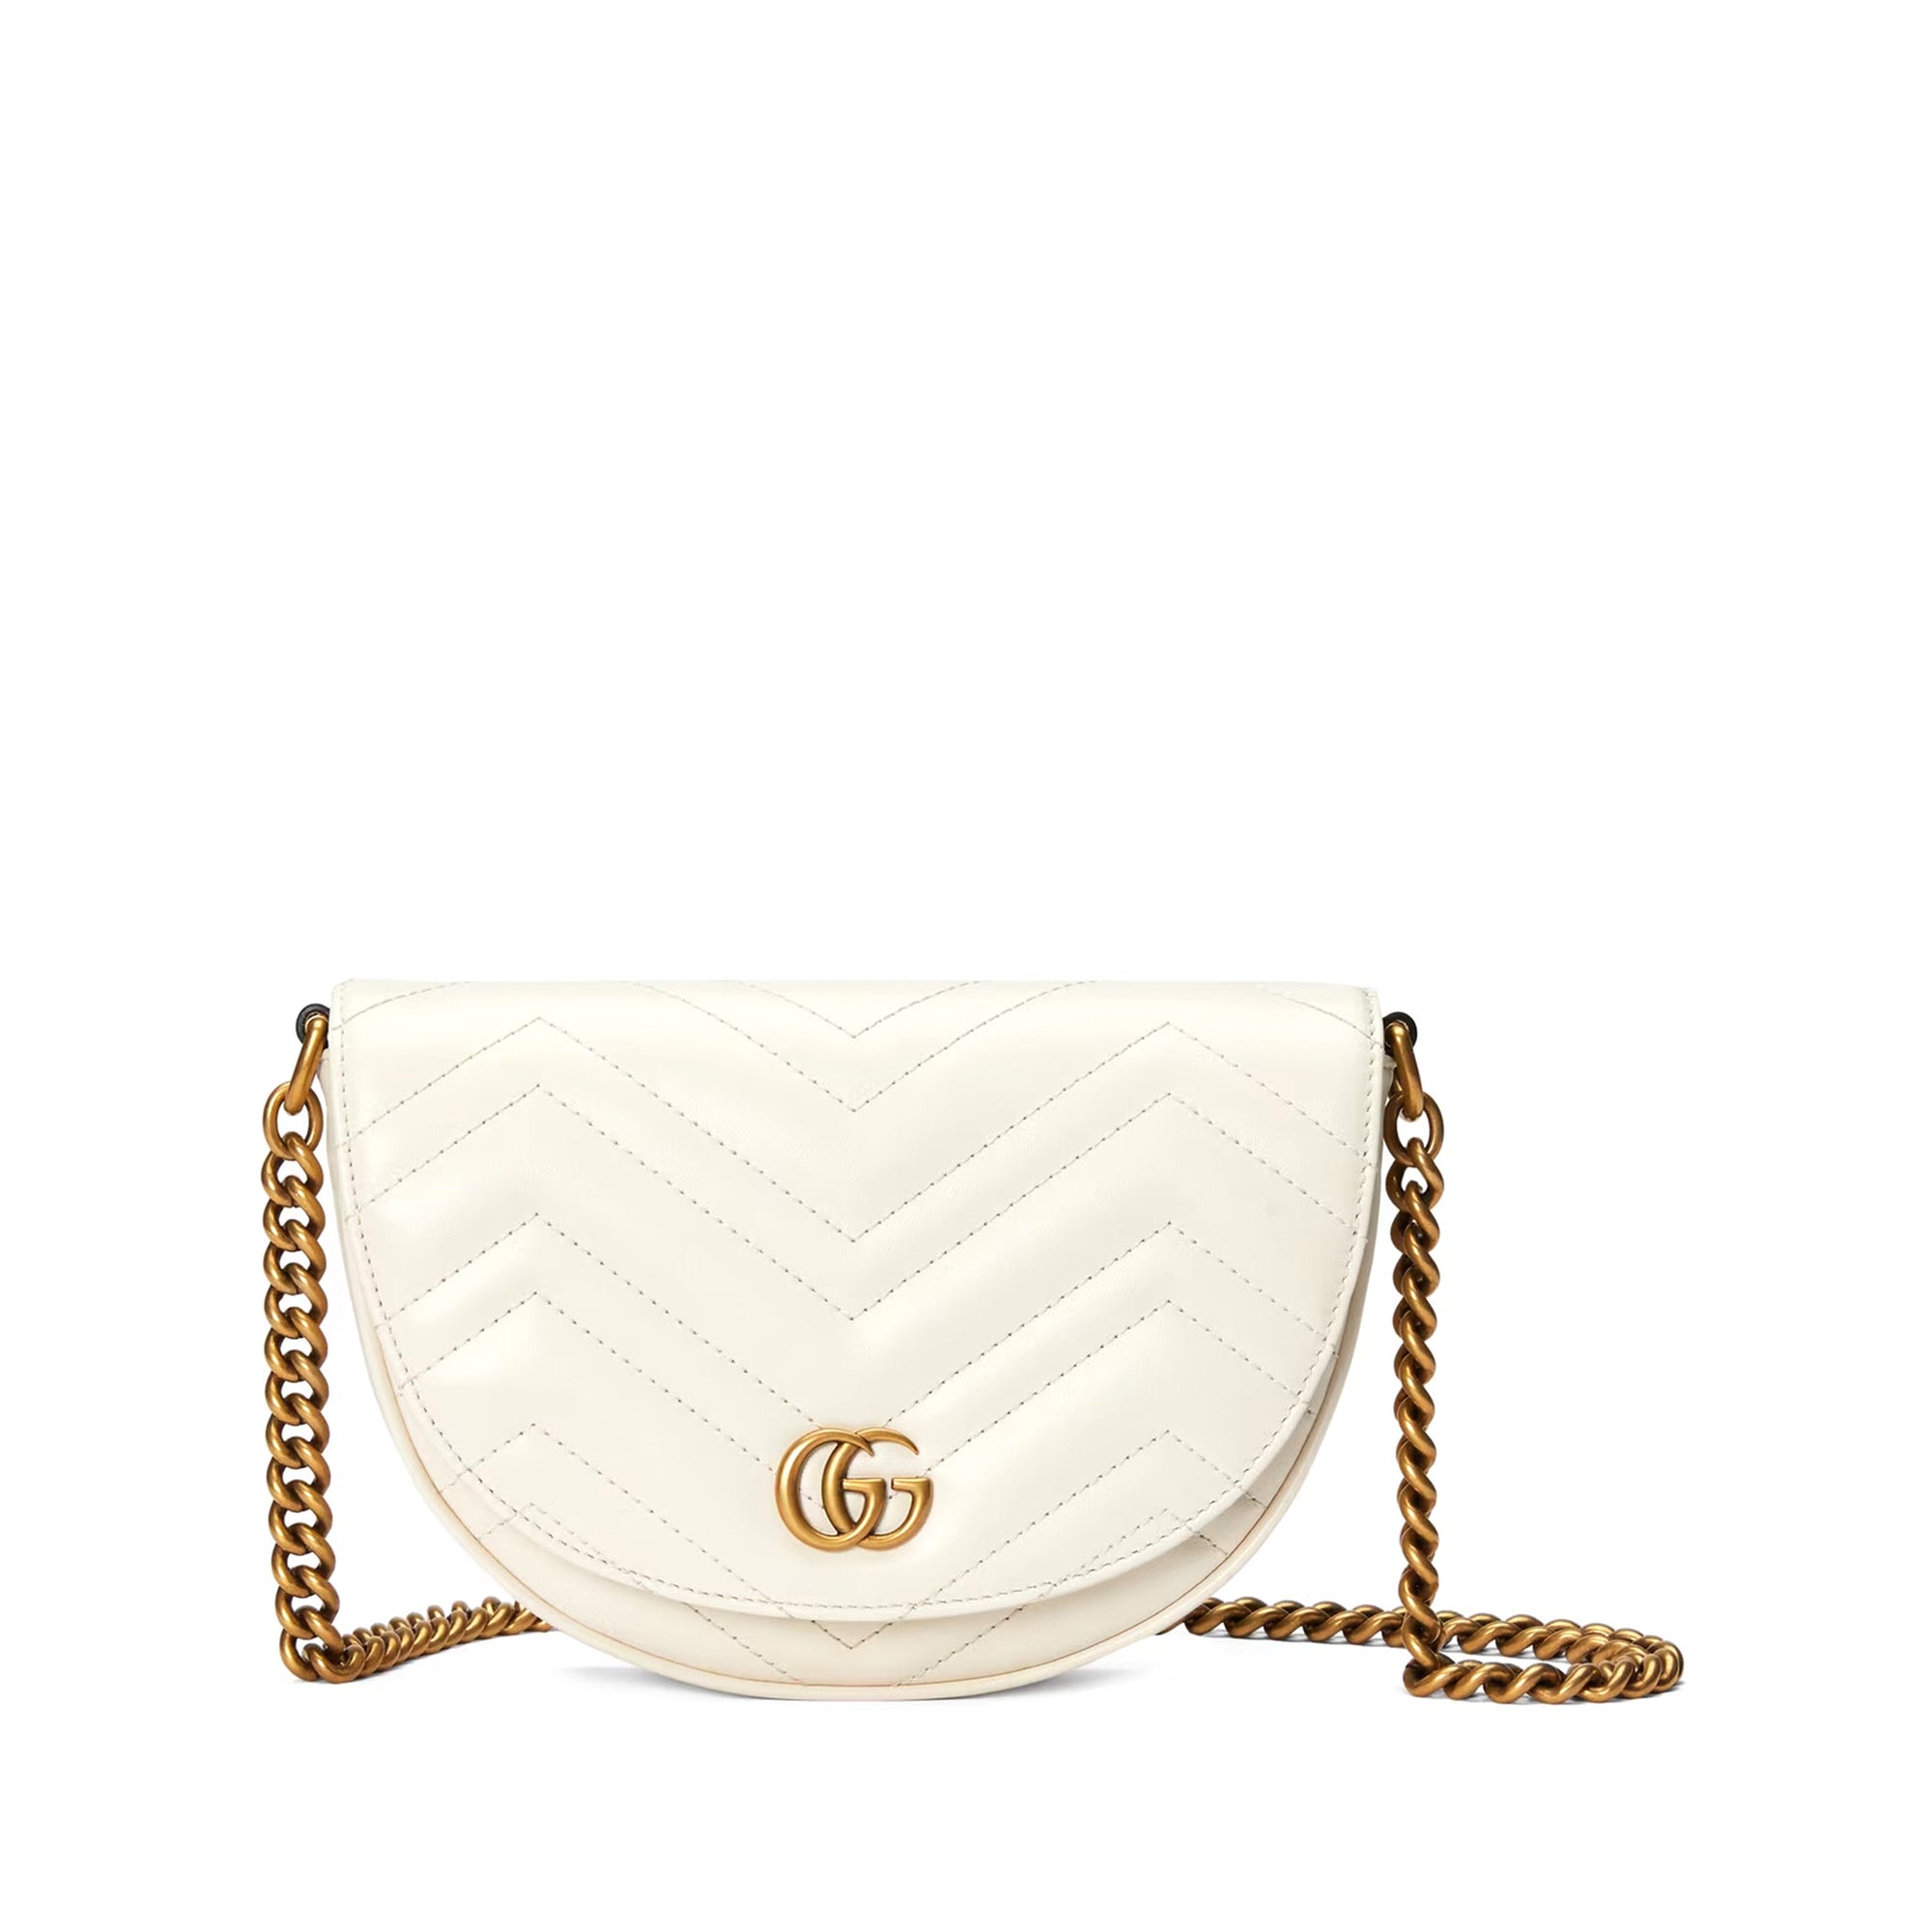 Gucci - Women’s GG Marmont Matelasse Chain Mini Bag - (White) view 1